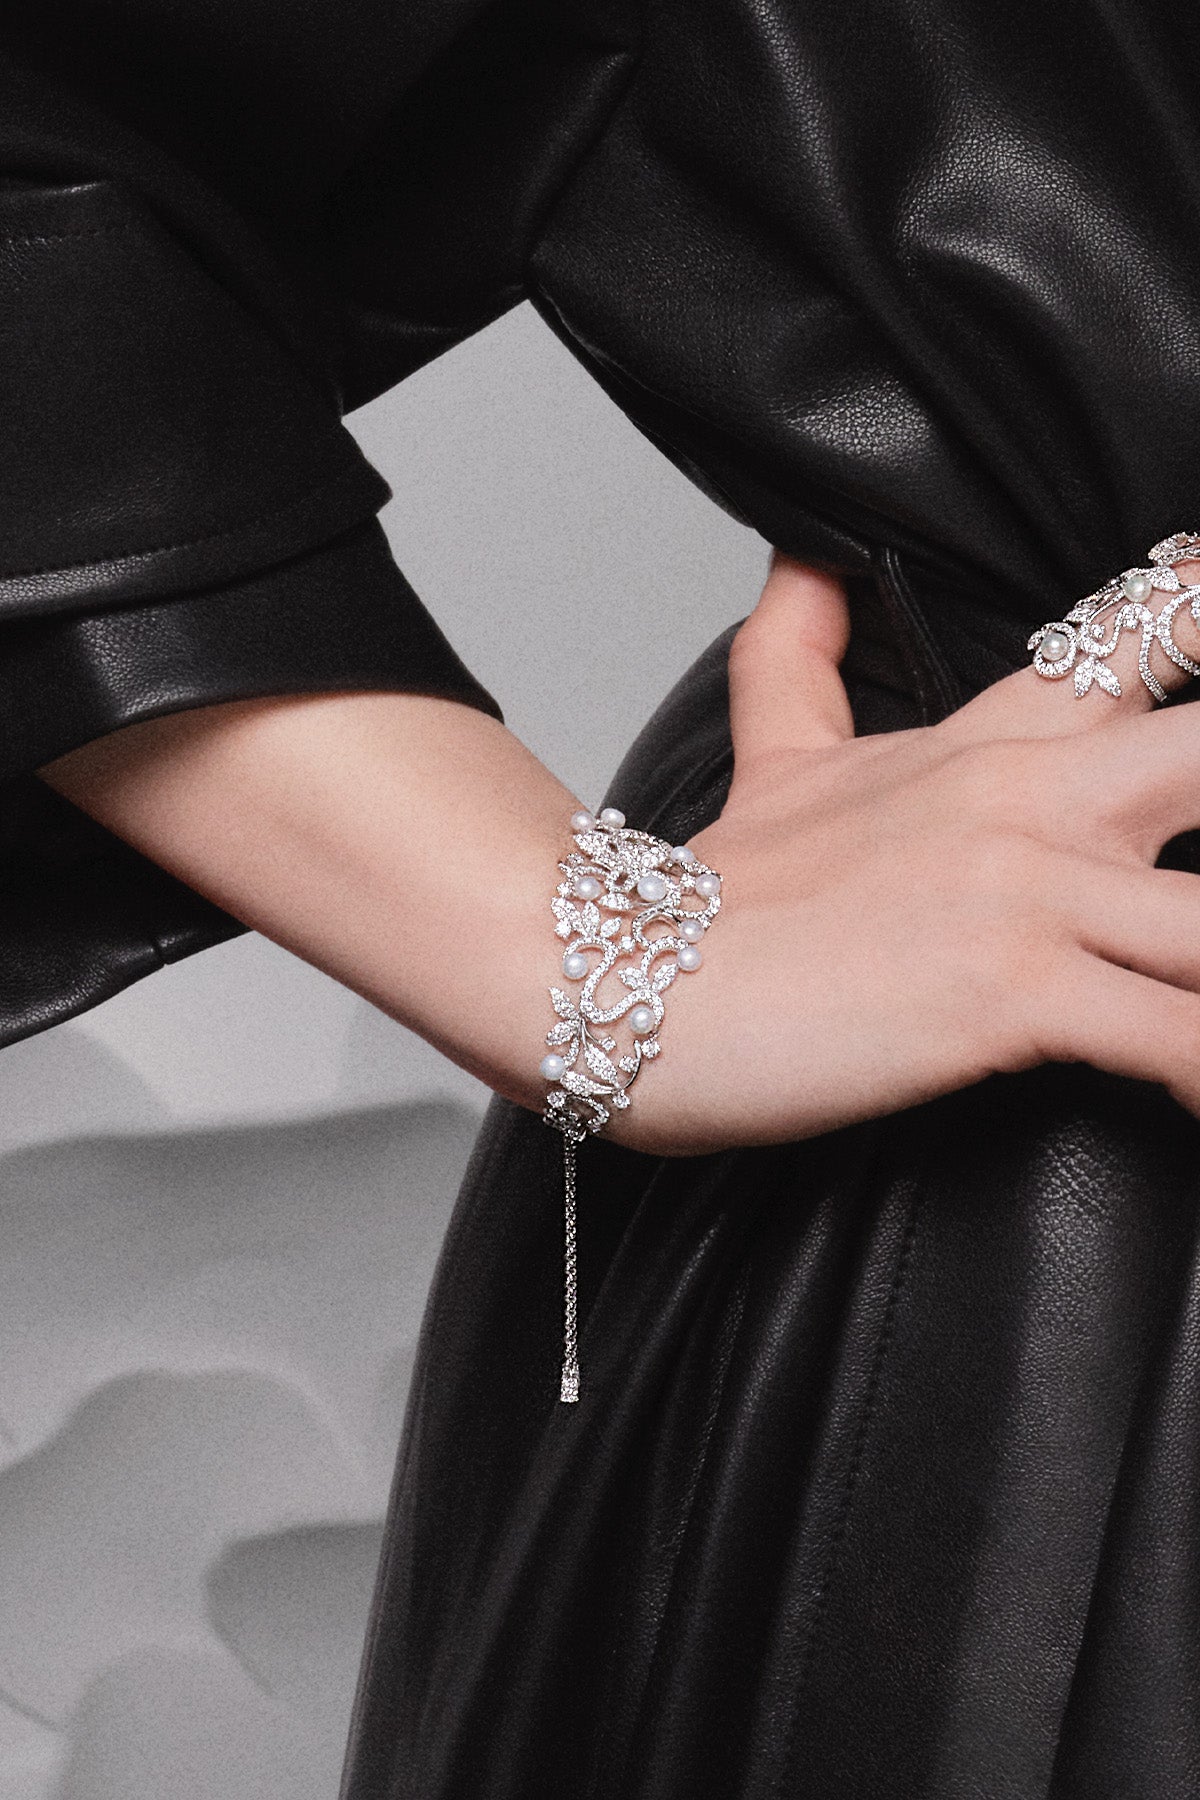 APM Monaco Statement Flower Adjustable Bracelet with Pearls in Silver